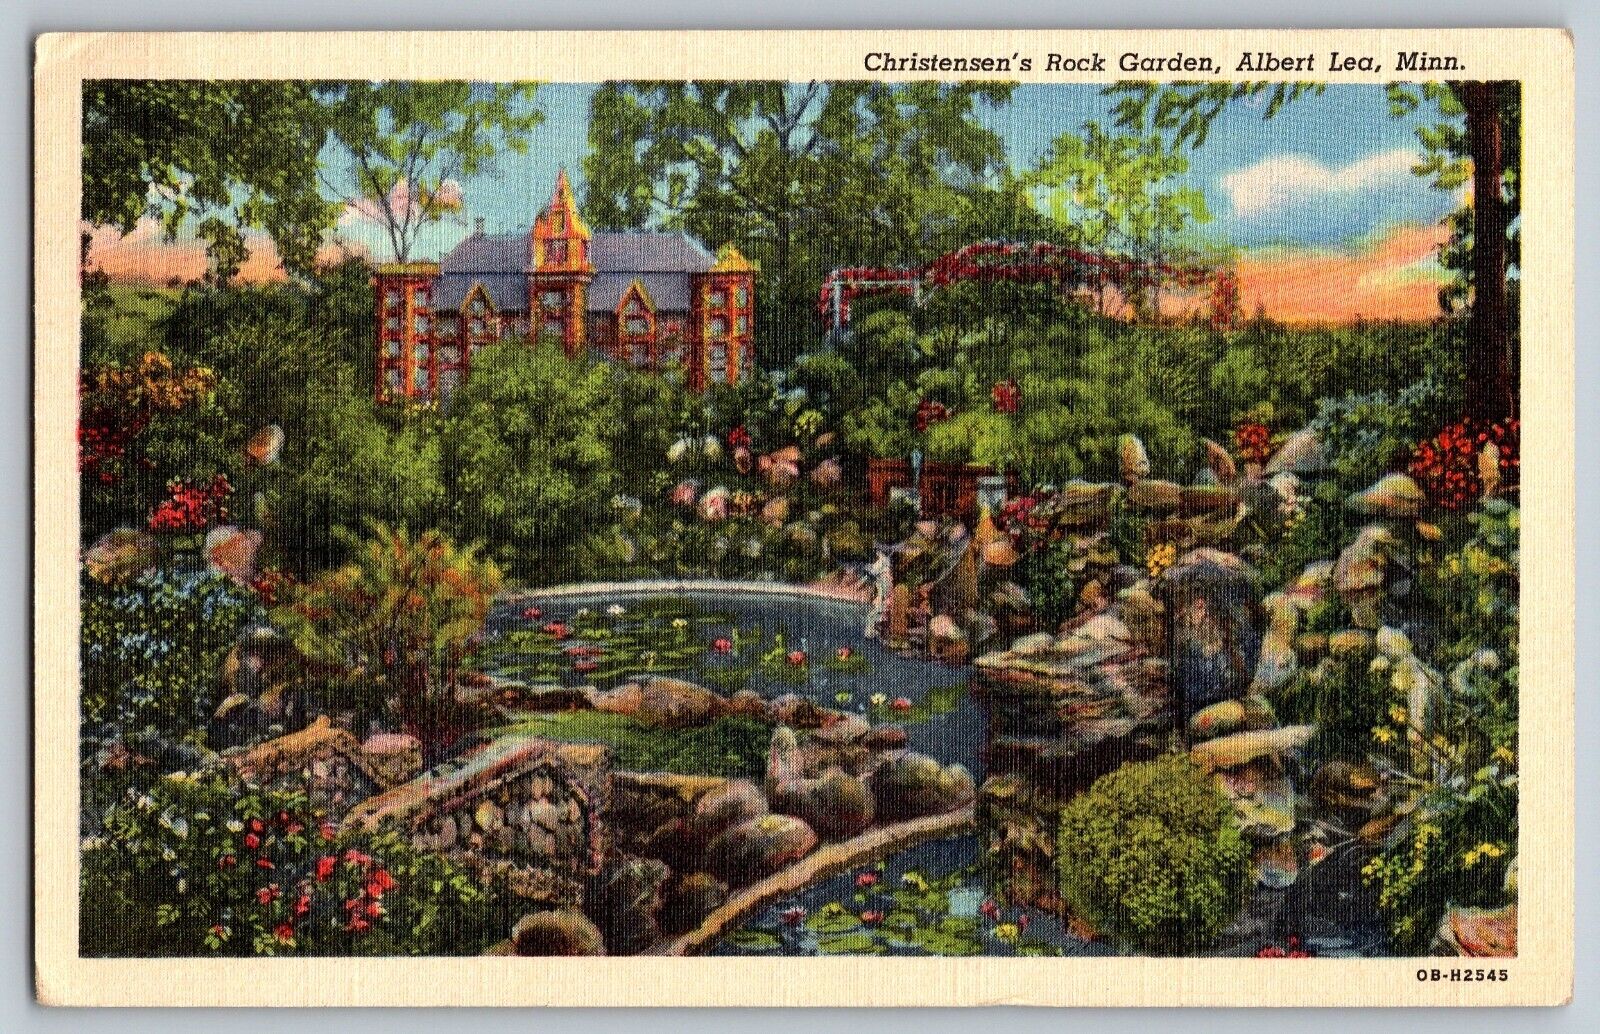 Albert Lea, Minnesota - Beautiful Christensen's Rock Garden - Vintage Postcard